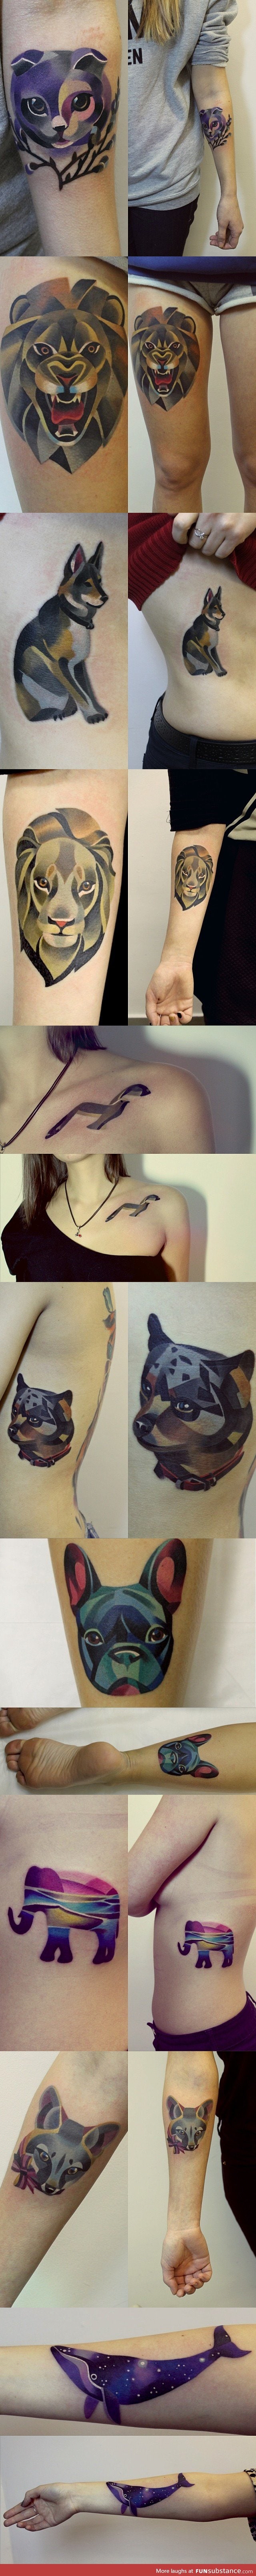 Animal Tattoos by Sasha Unis*x